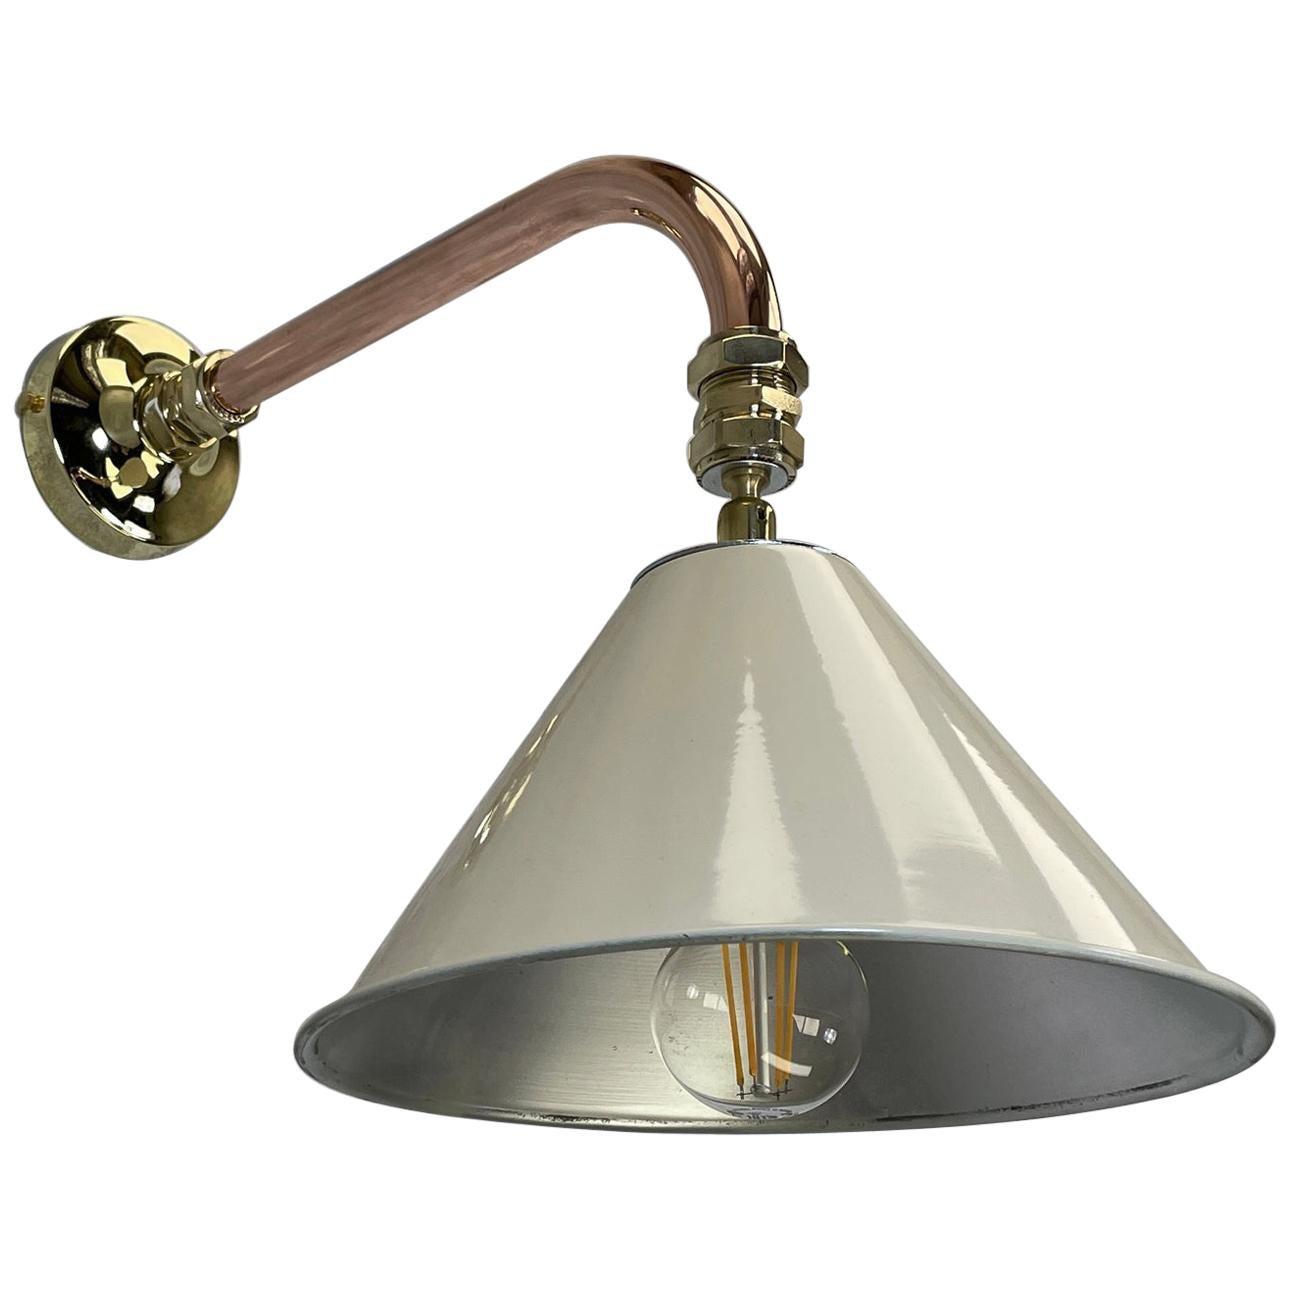 1980's Copper & Brass Cantilever Lamp Cream British Army Lamp Shade